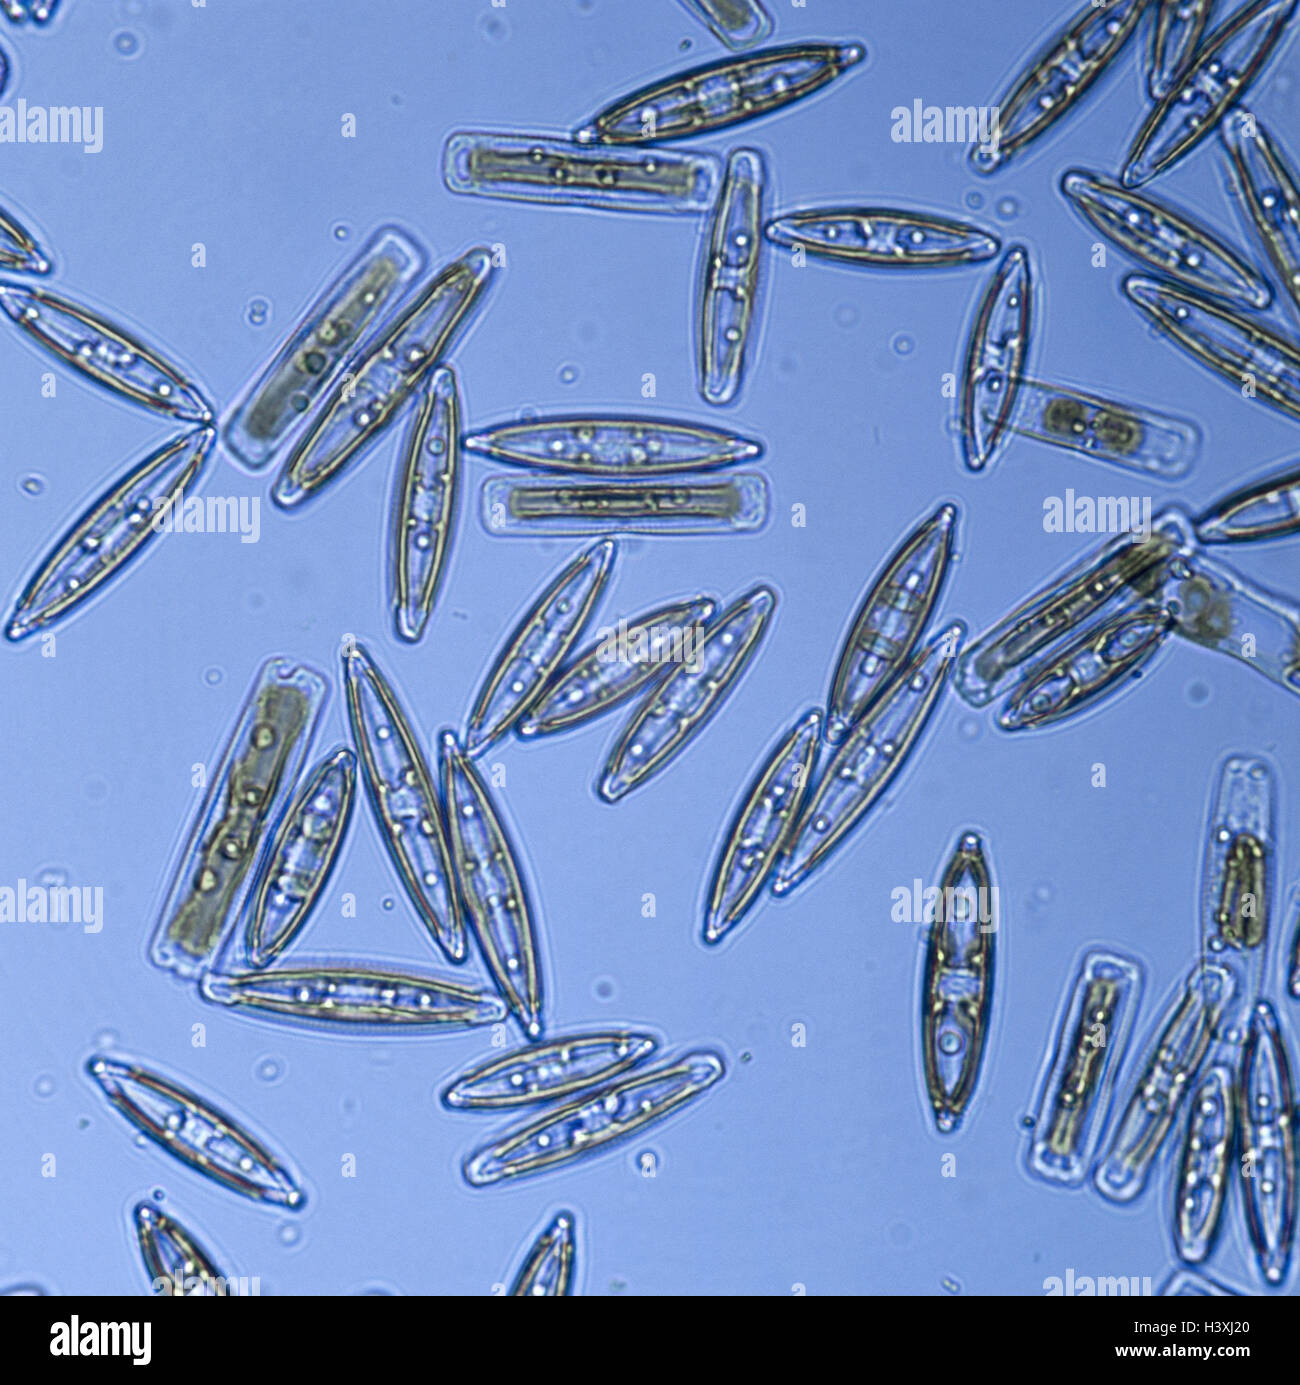 Mikroskop-Aufnahme, Kiesel Algen, Pflanzen, Algen, einzellige, Einzeller,  Kieselalgen, Diatomeen, Bacillariophyceae Stockfotografie - Alamy